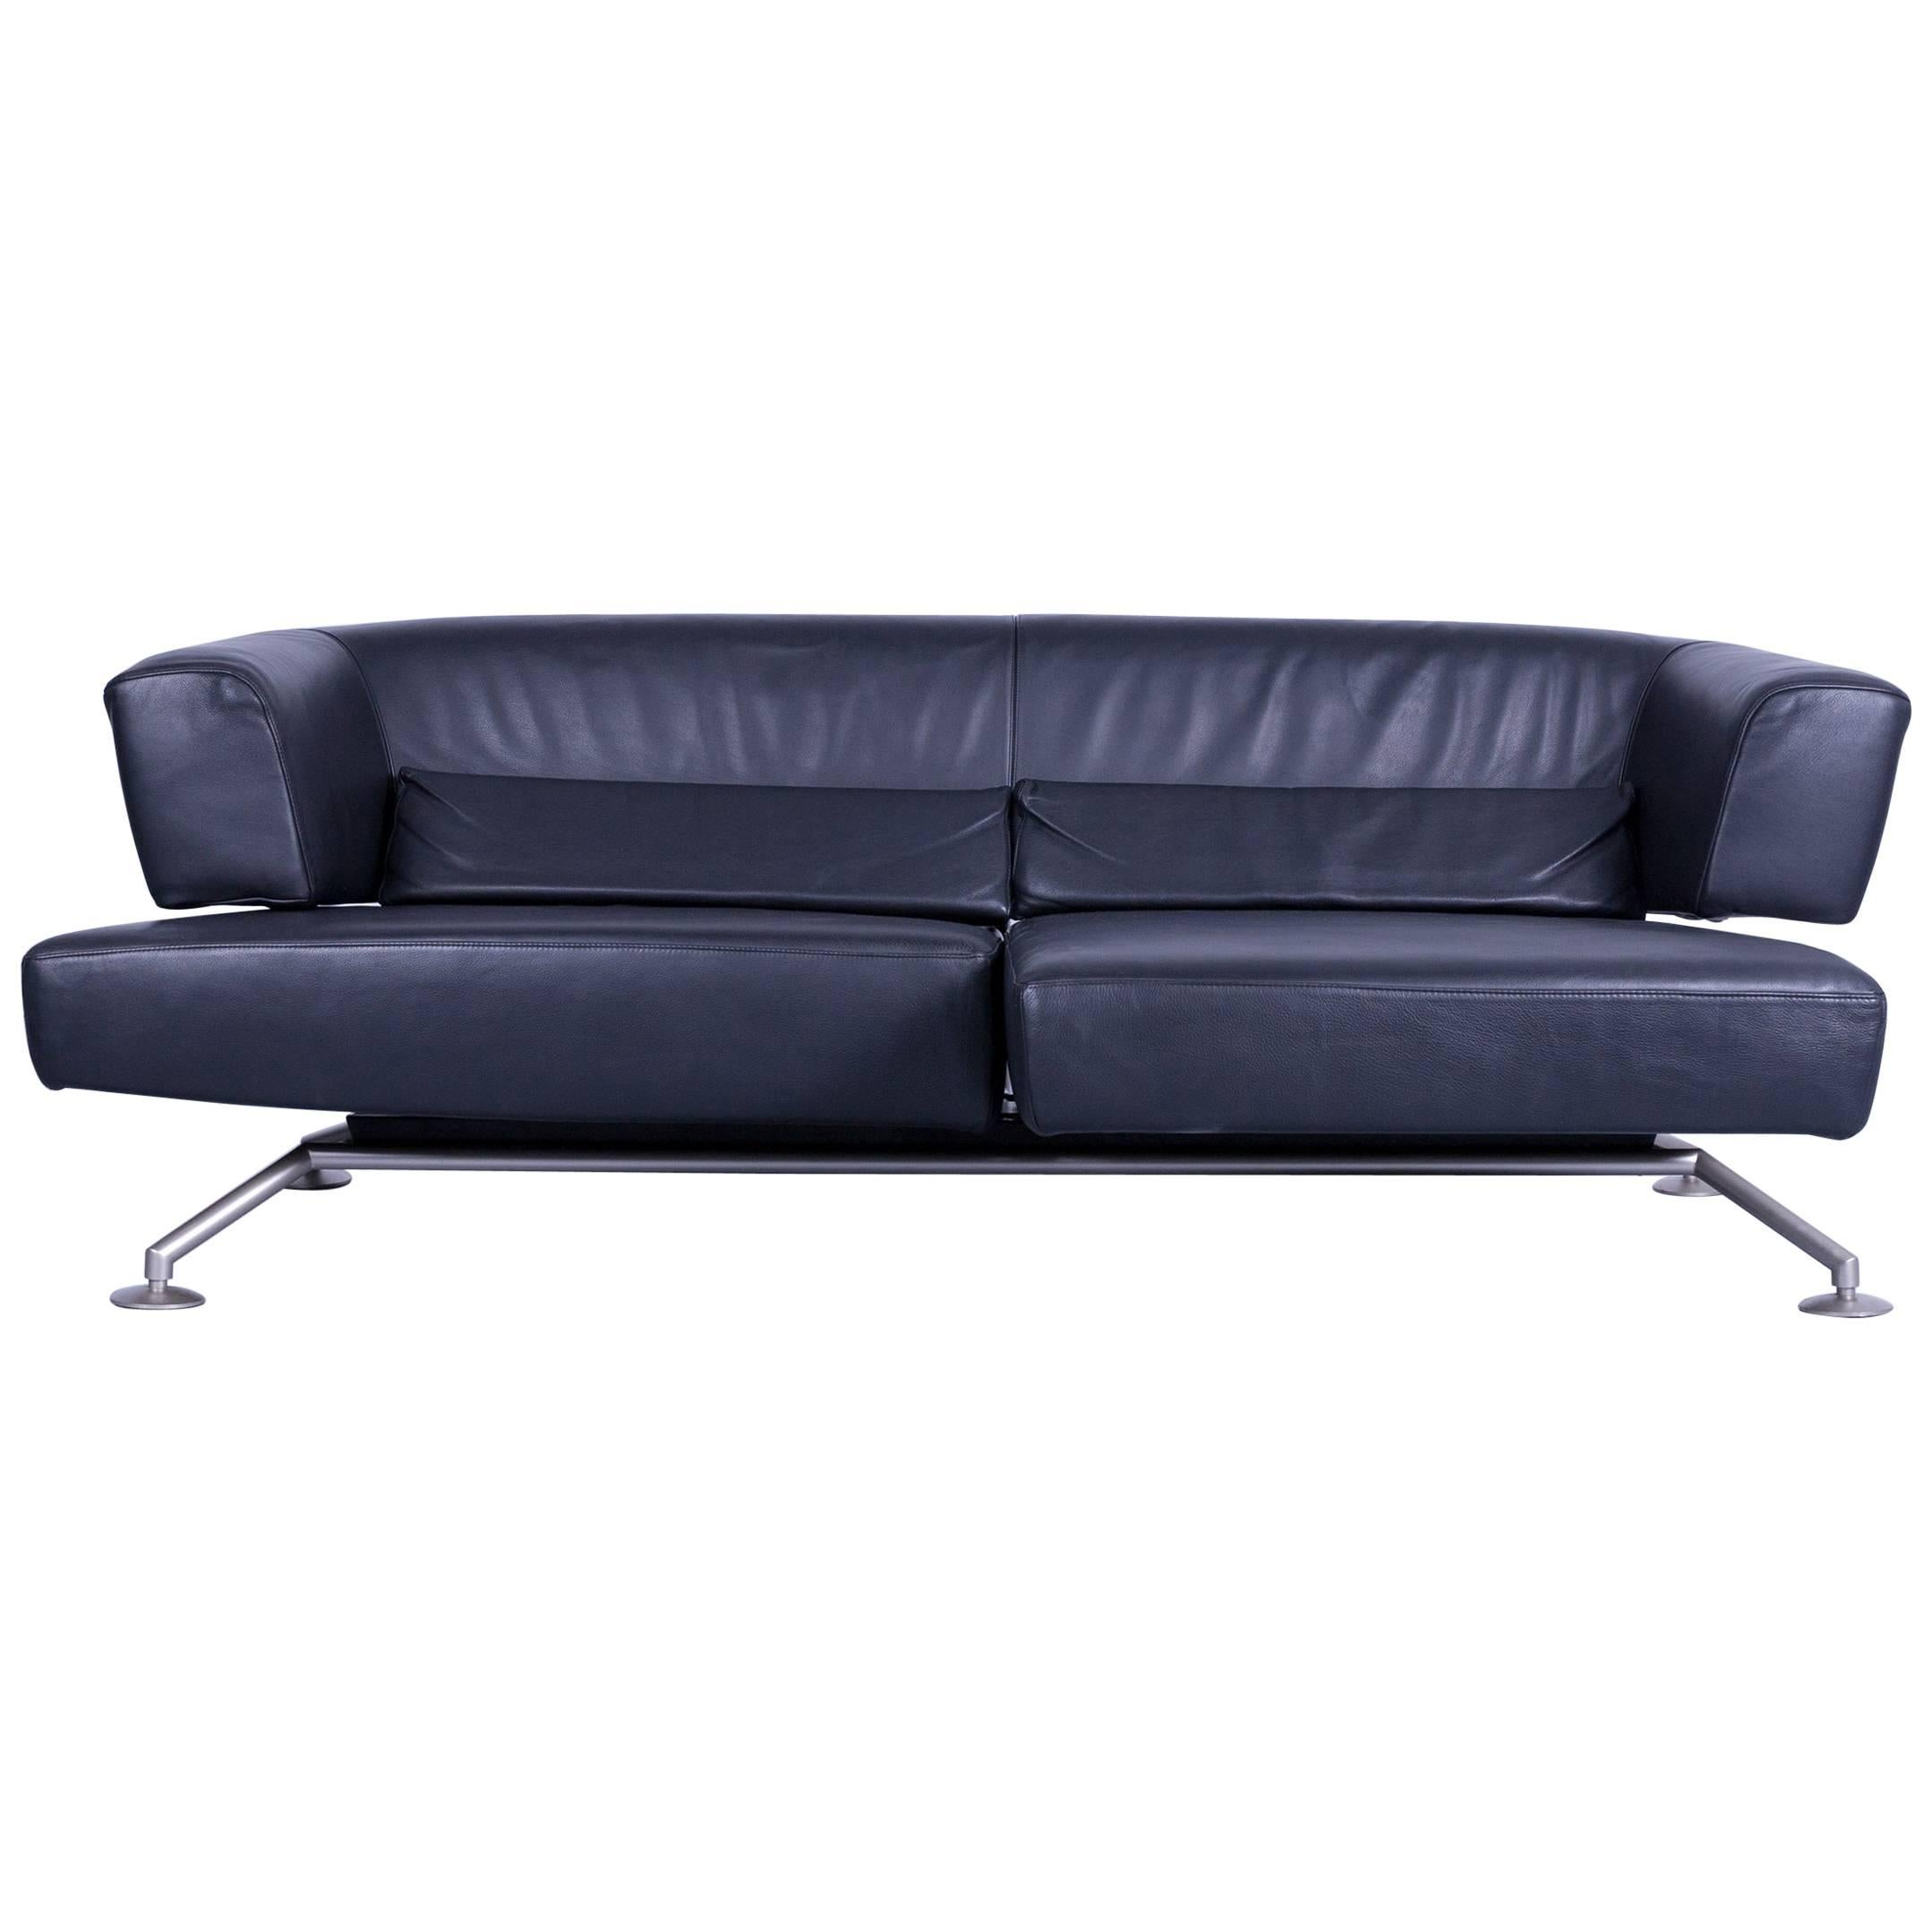 COR Circum Designer Sofa Black Leather Three-Seat Couch Function Modern